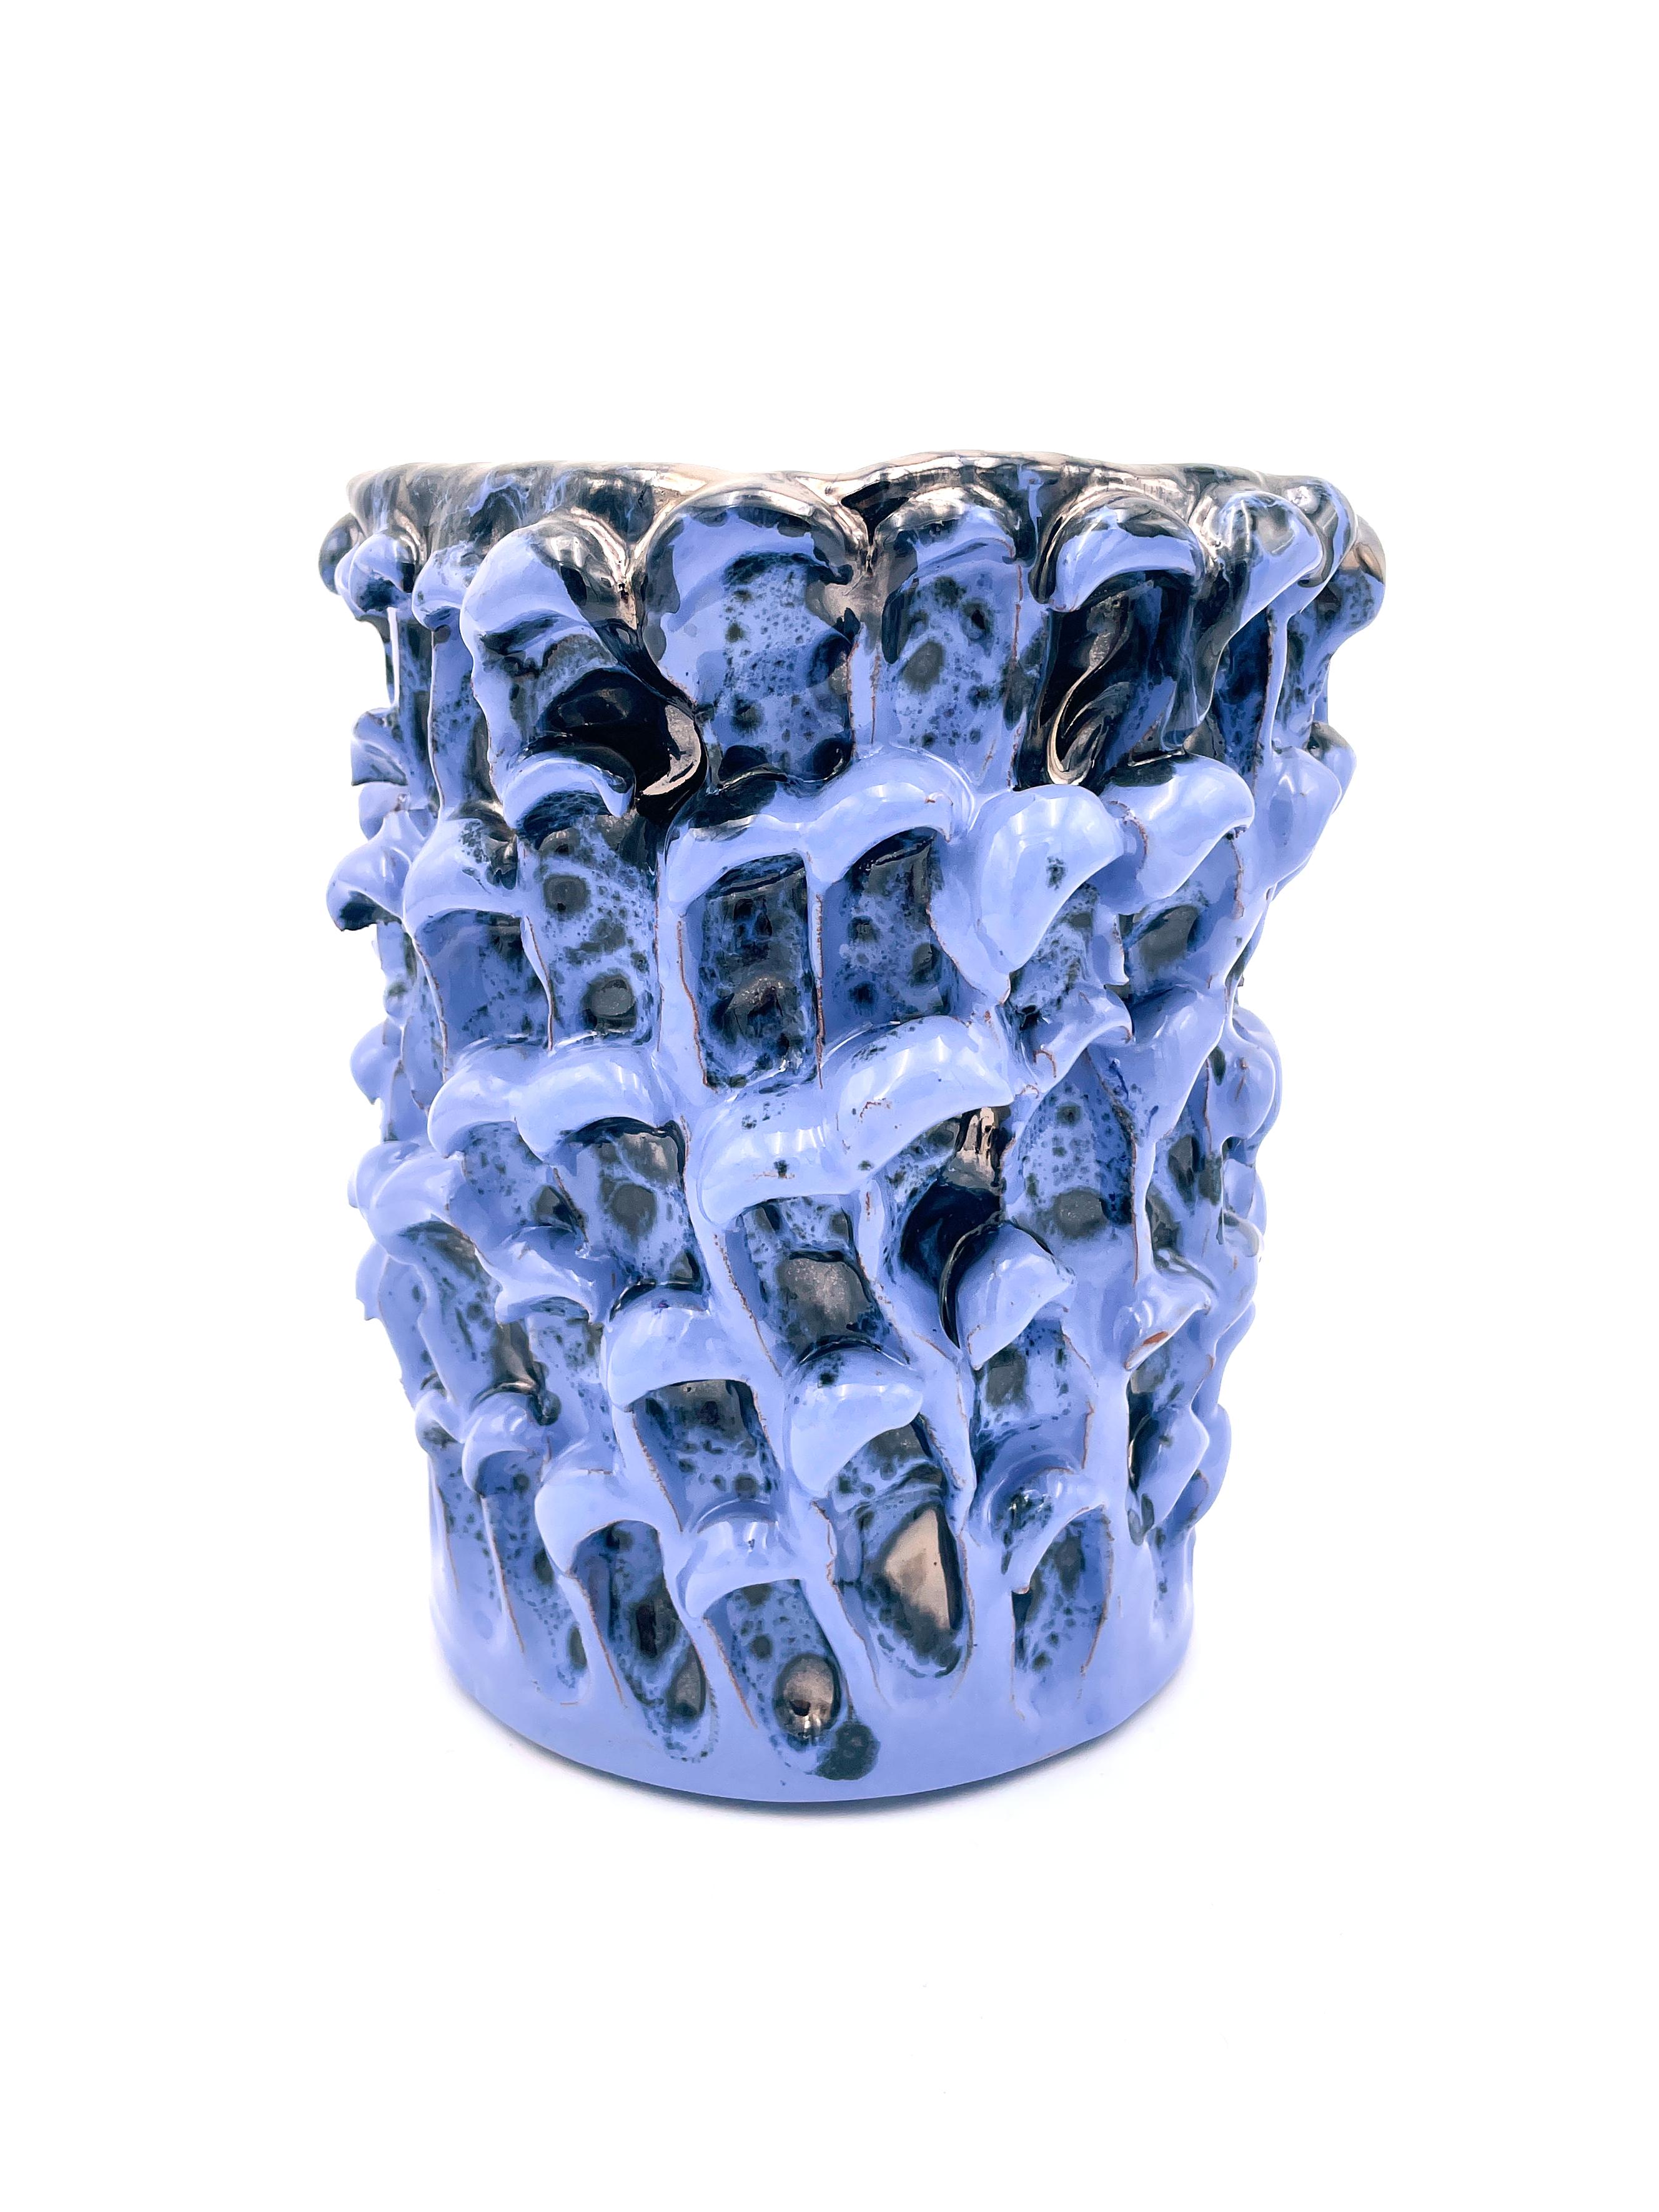 Organic Modern Onda Vase, Metallic Lavender 01 For Sale